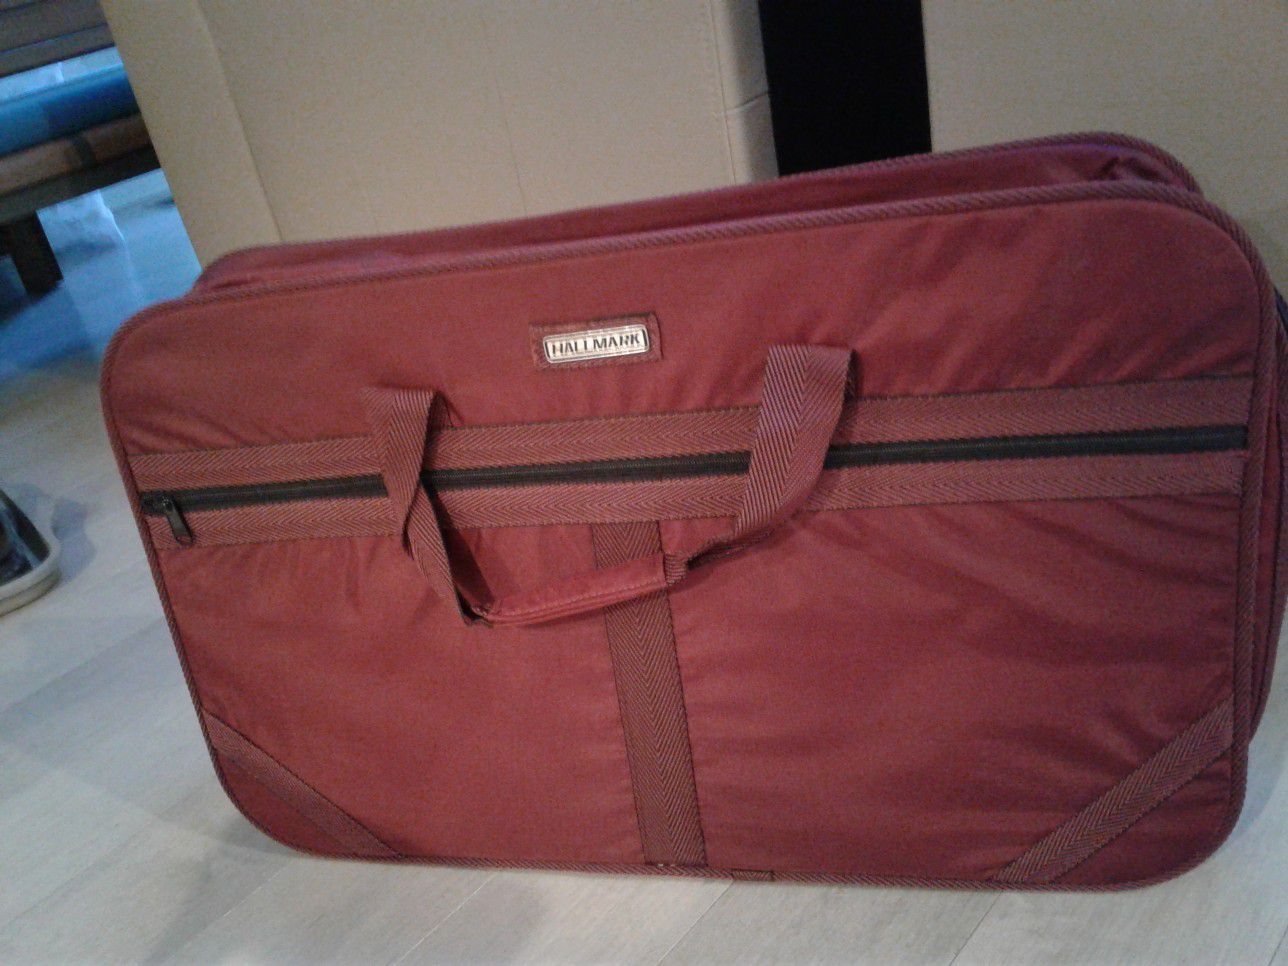 Bag, case for artwork, carry on. New. Hallmark